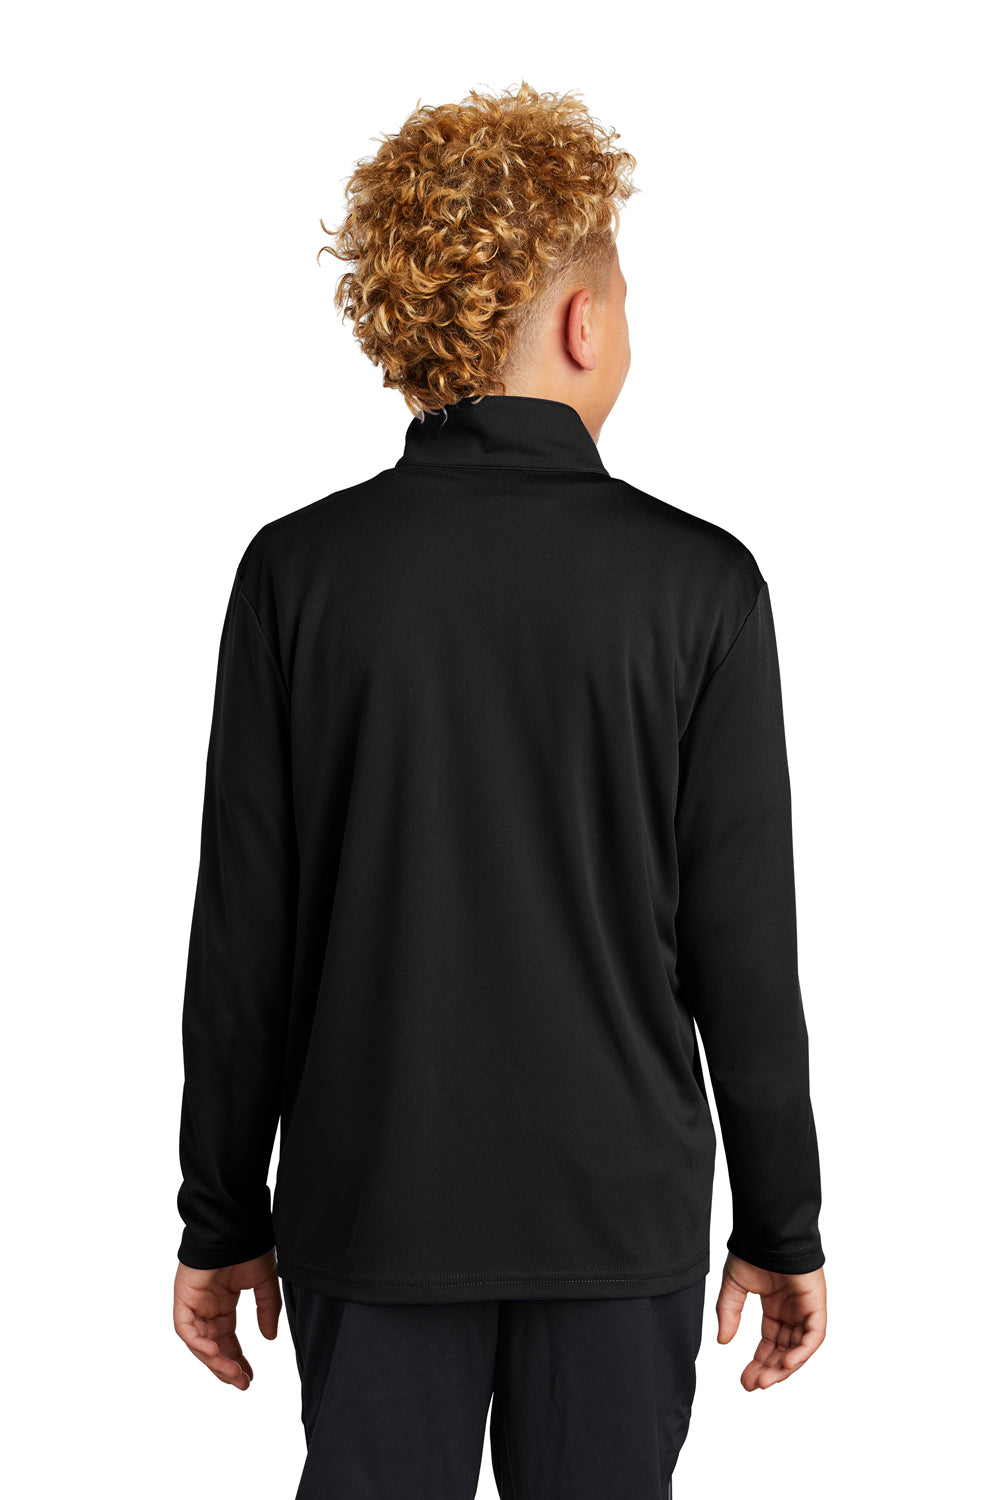 Sport-Tek YST357 Youth Competitor Moisture Wicking 1/4 Zip Sweatshirt Black Back